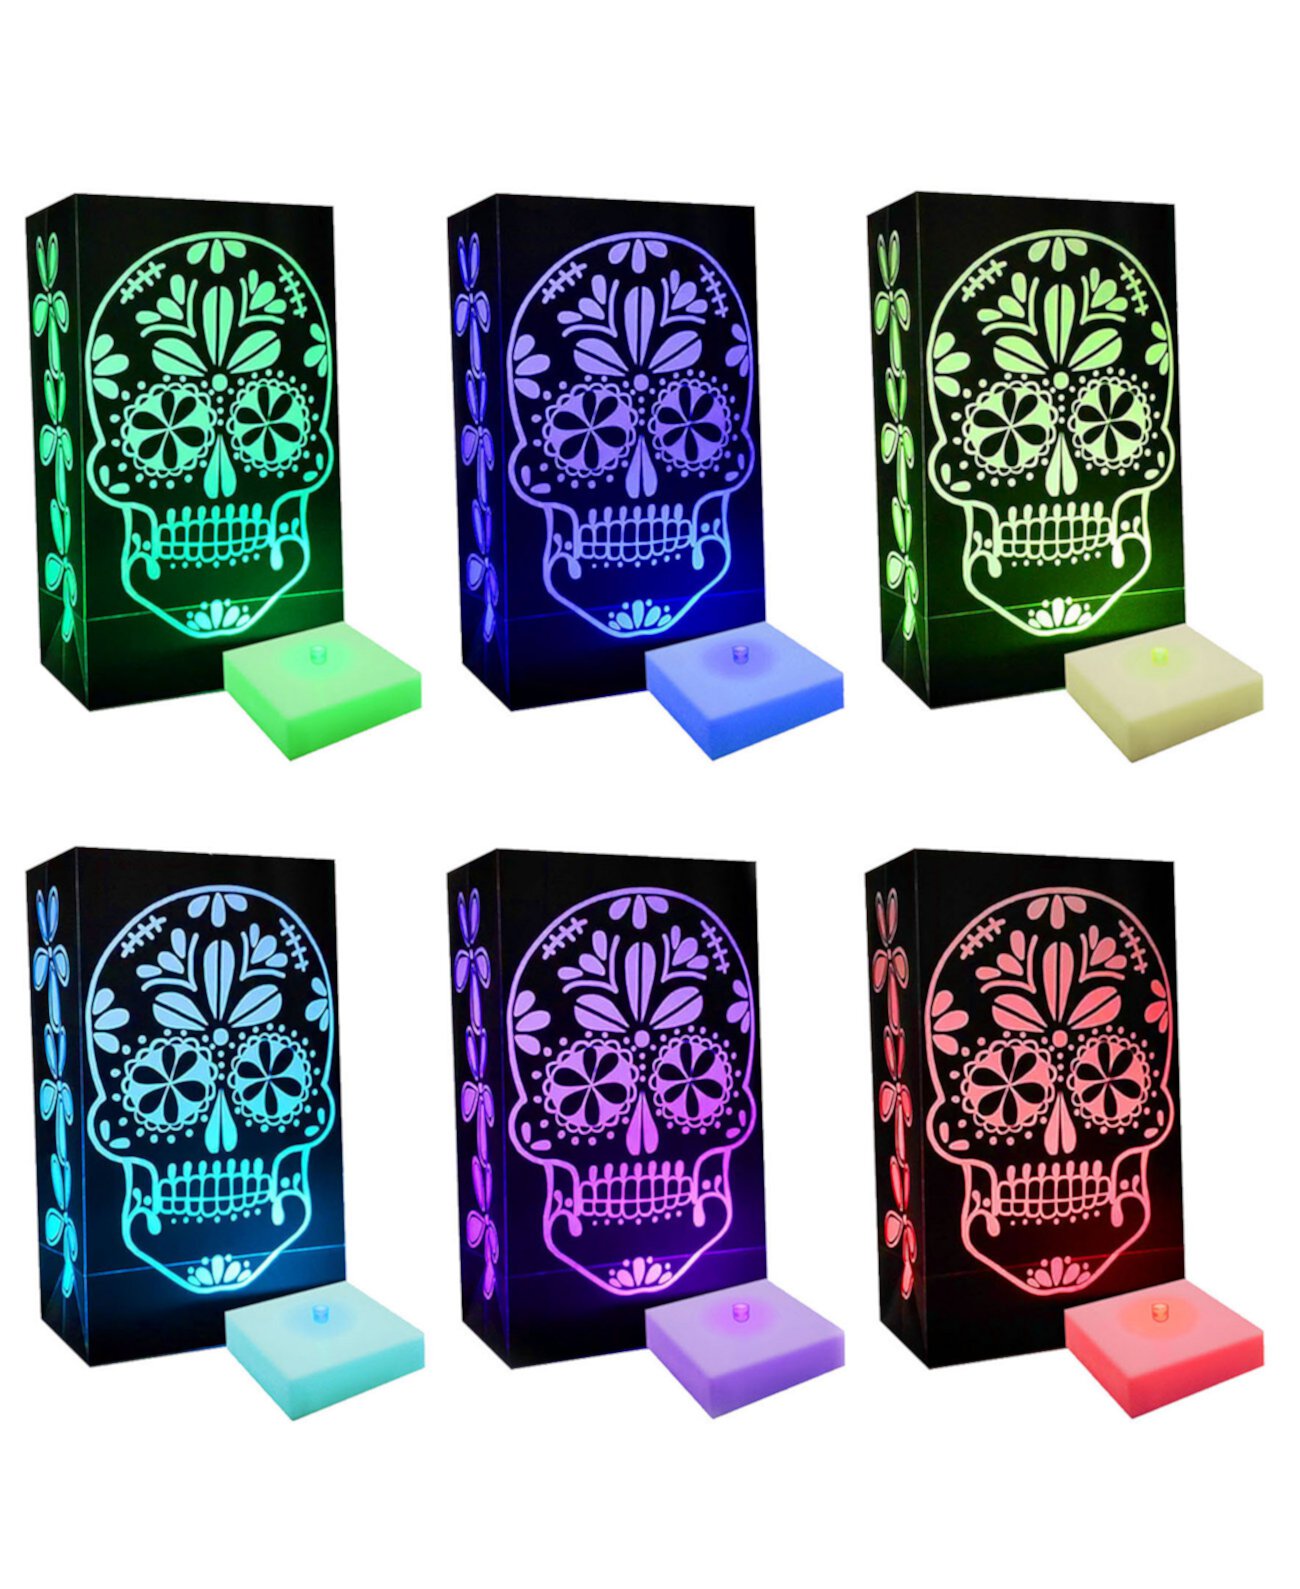 Набор Luminaria Sugar Skull со светодиодами, меняющими цвет, на батарейках, 6 шт. JH Specialties Inc / Lumabase